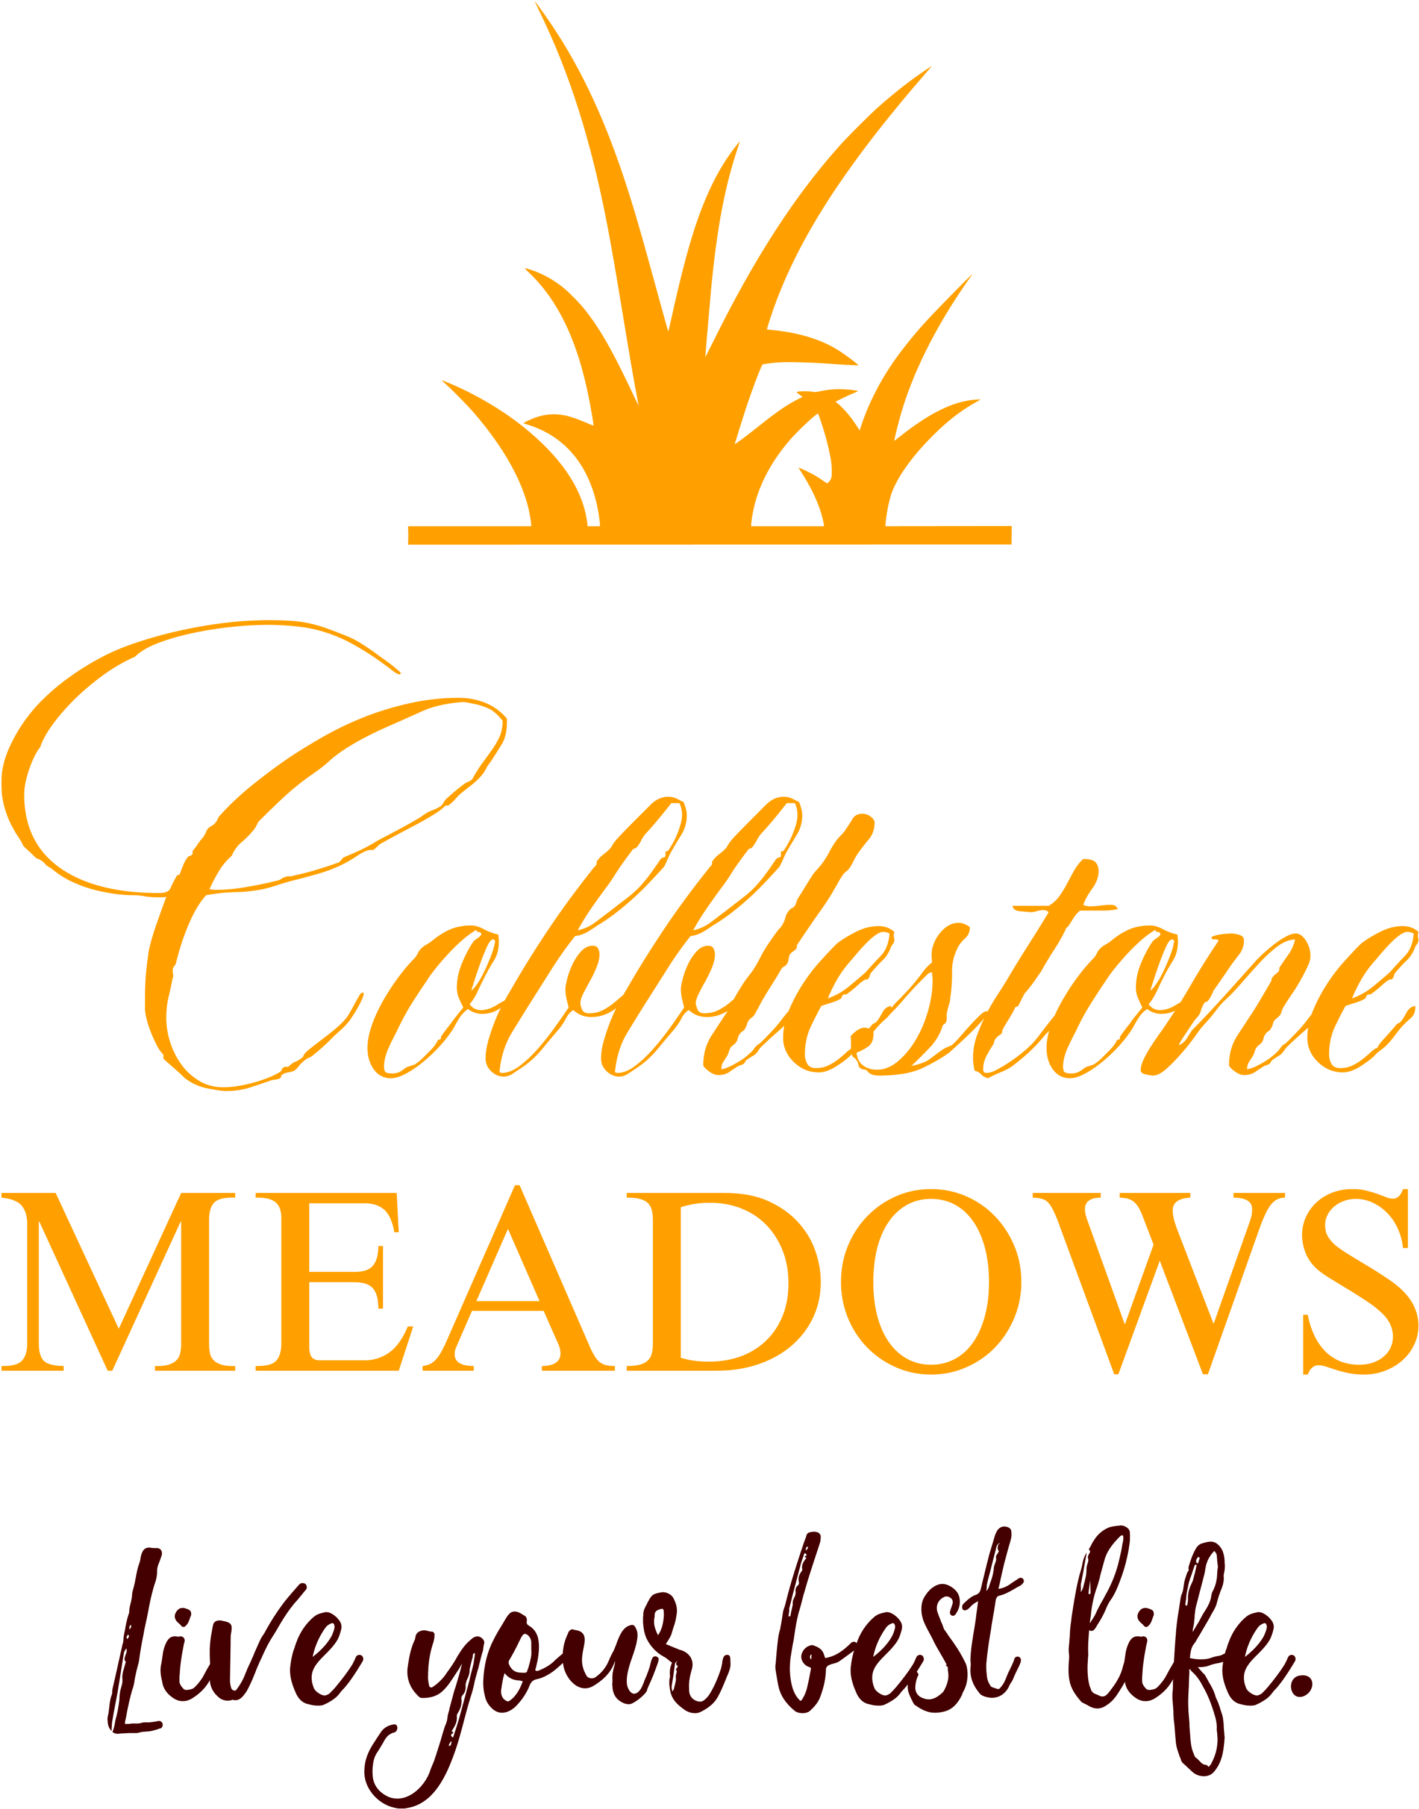 Cobblestone Meadows Logo PNG